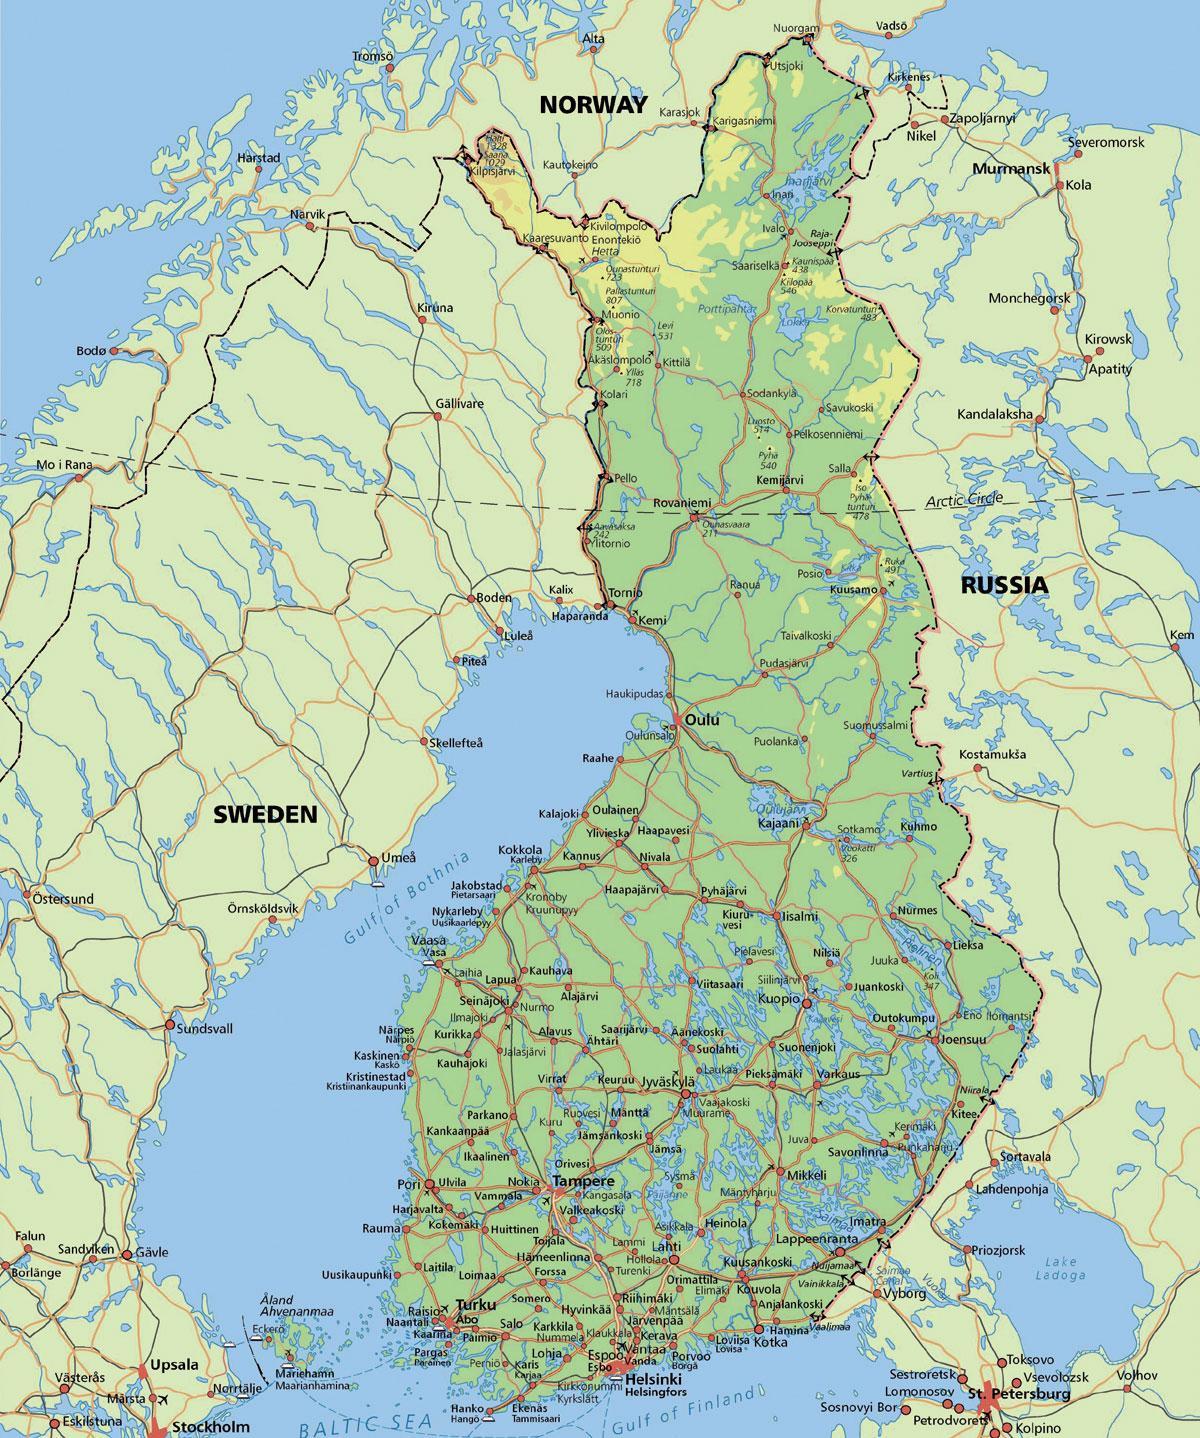 polarsirkelen kart Polarsirkelen Finland Kart Kart Over Polarsirkelen Finland Northern Europe Europe polarsirkelen kart